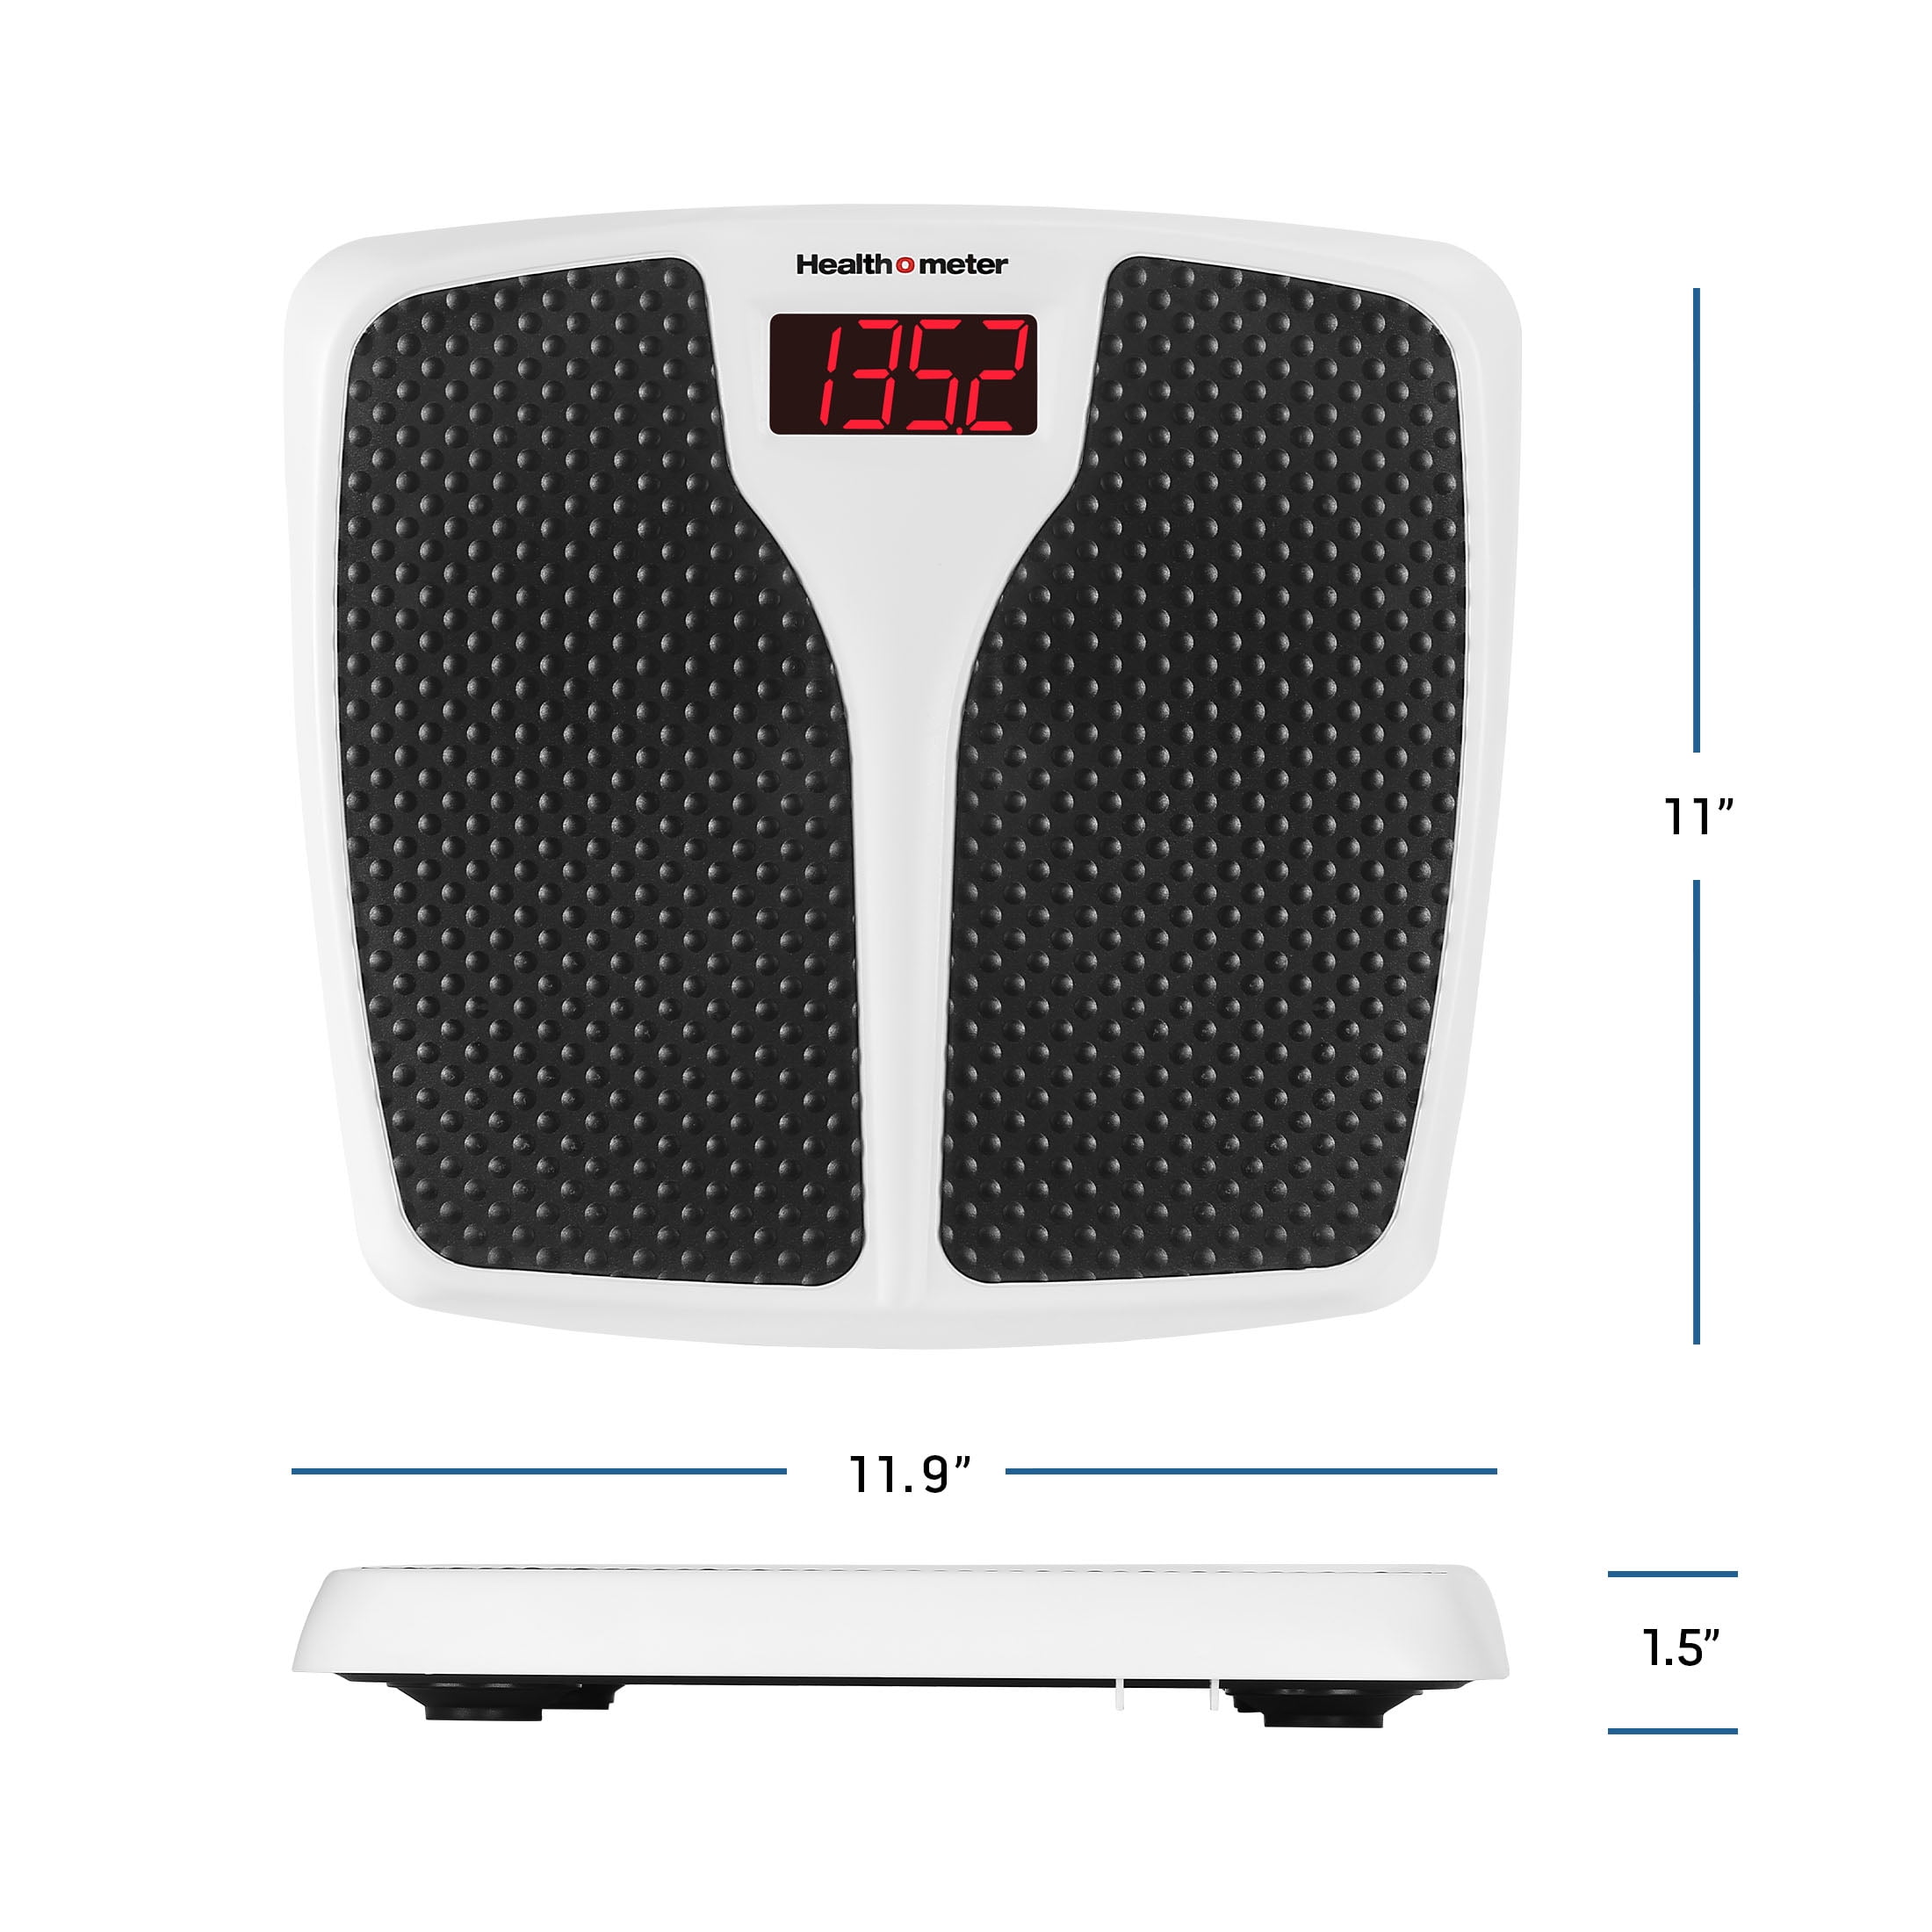  Health o Meter HDR743 Digital Bathroom Scale, 350 lb